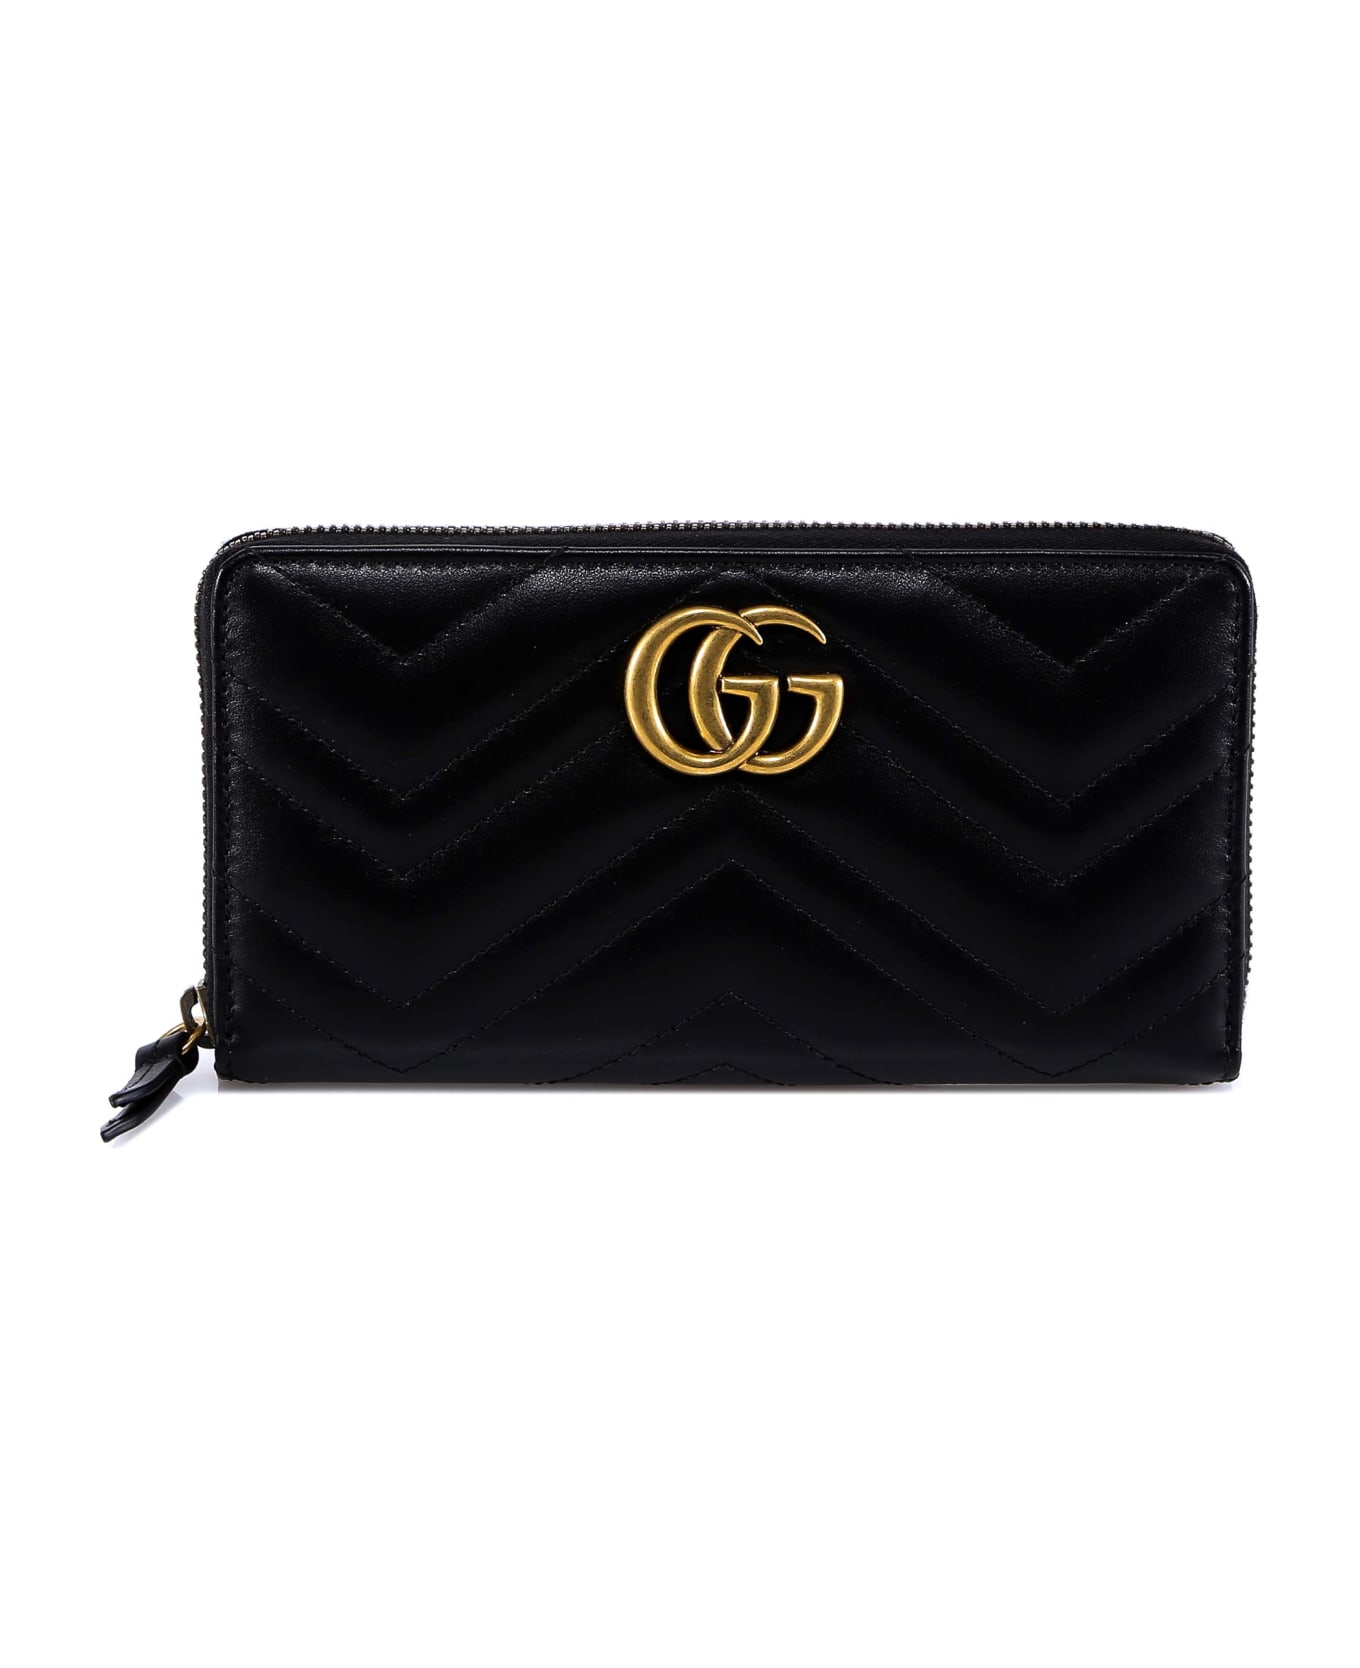 Gucci Wallet - Black 財布